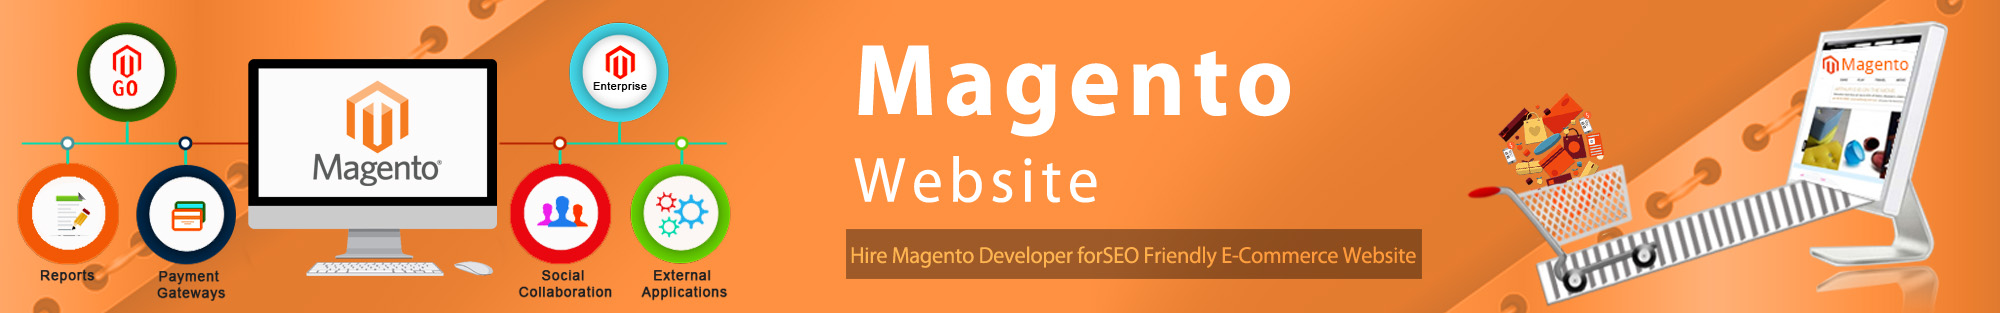 Magento website Development service in Mumbai india